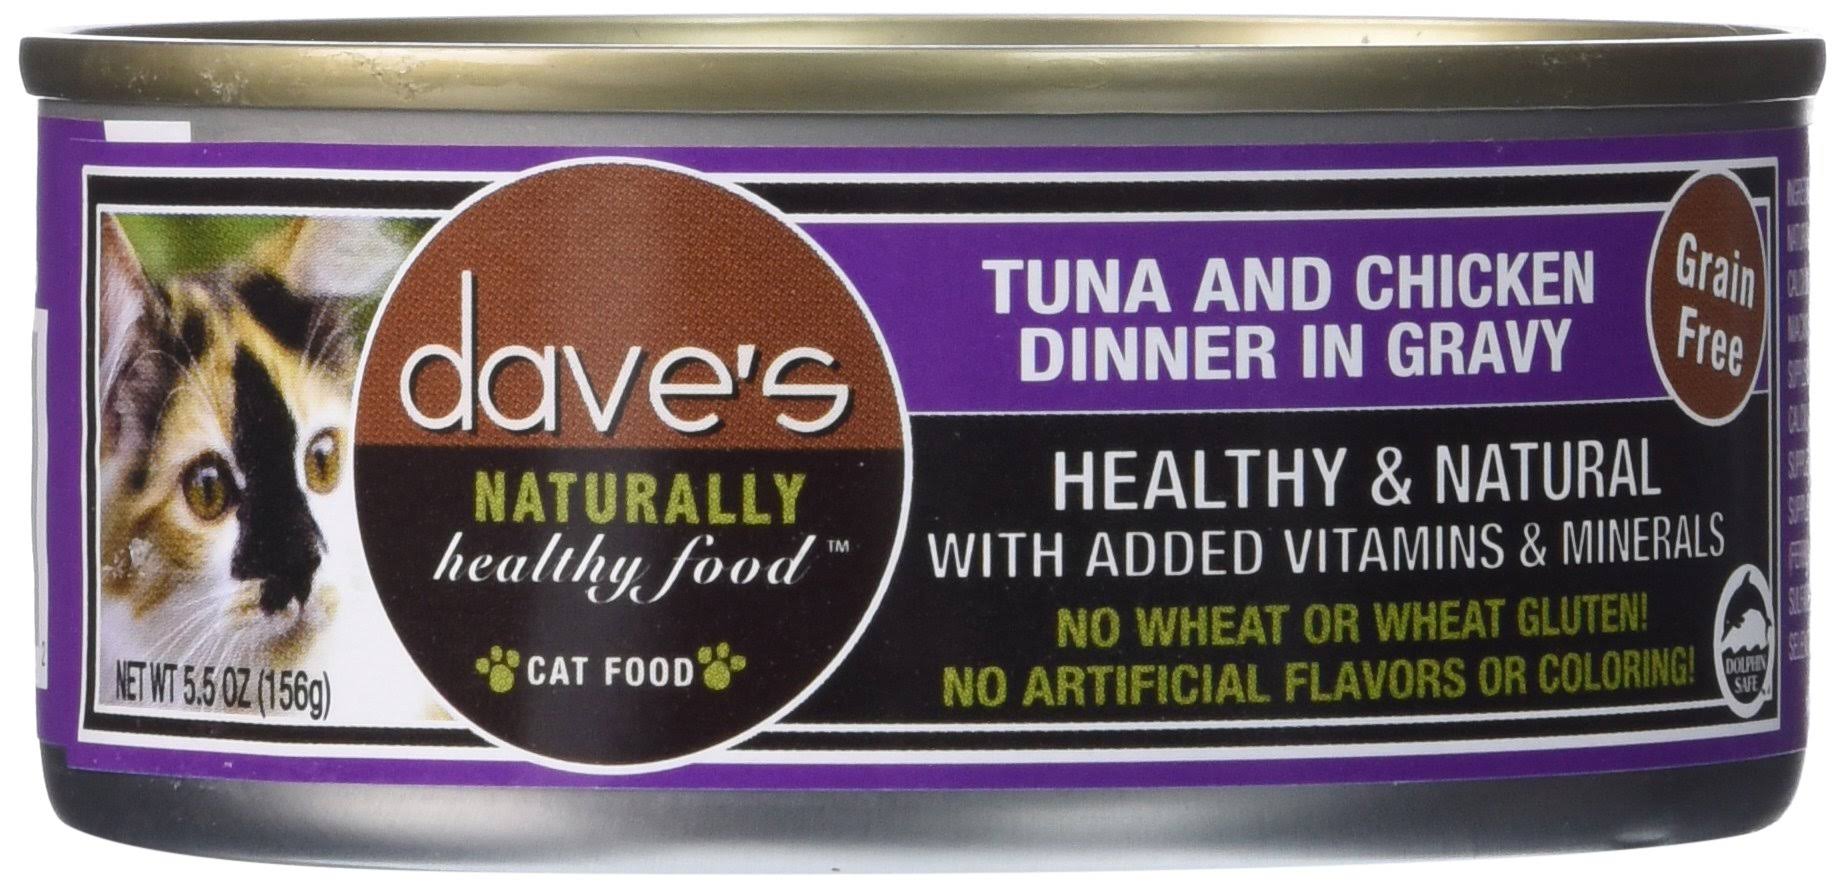 Dave's Cat Food - Tuna and Chicken Dinner in Gravy